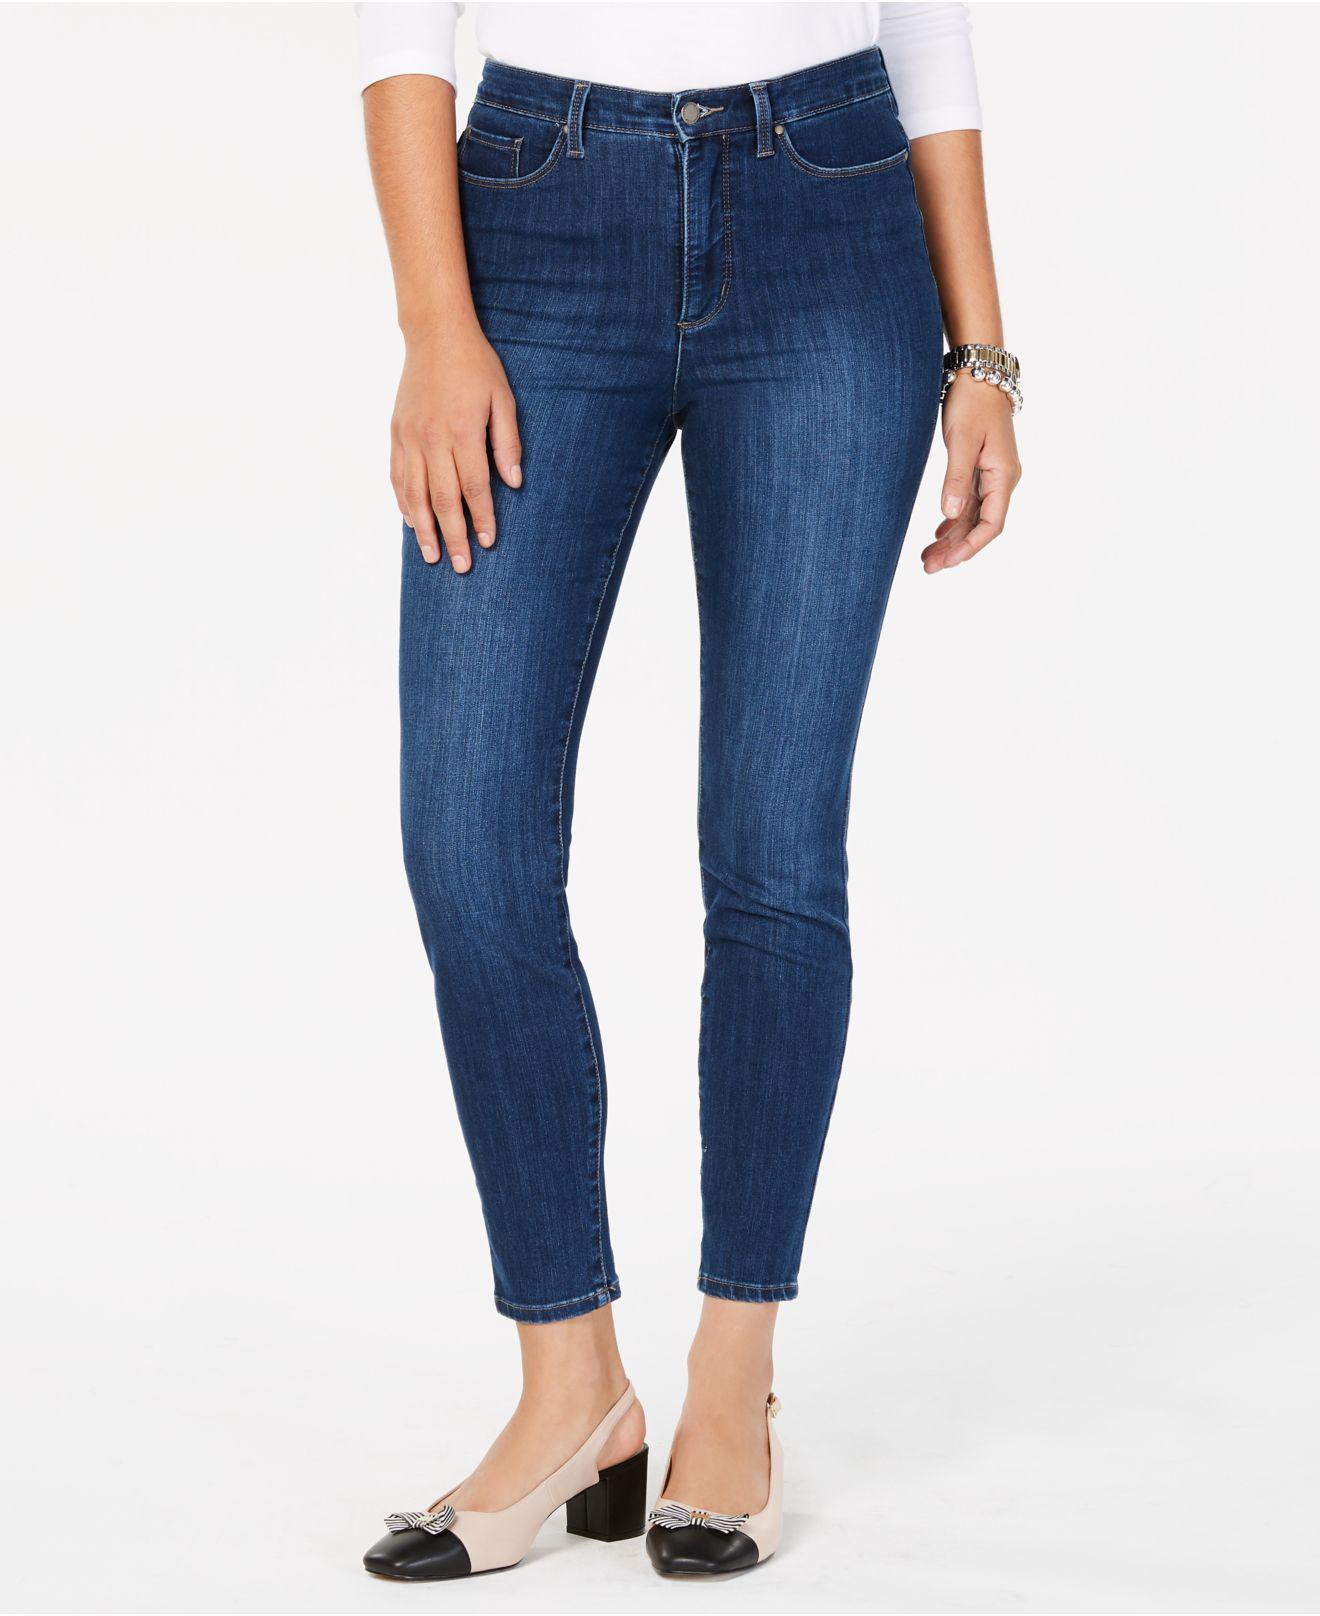 fvwitlyh Tummy Control Jeans for Women Women's Lift Super Comfy Stretch  Denim Skinny Jeans